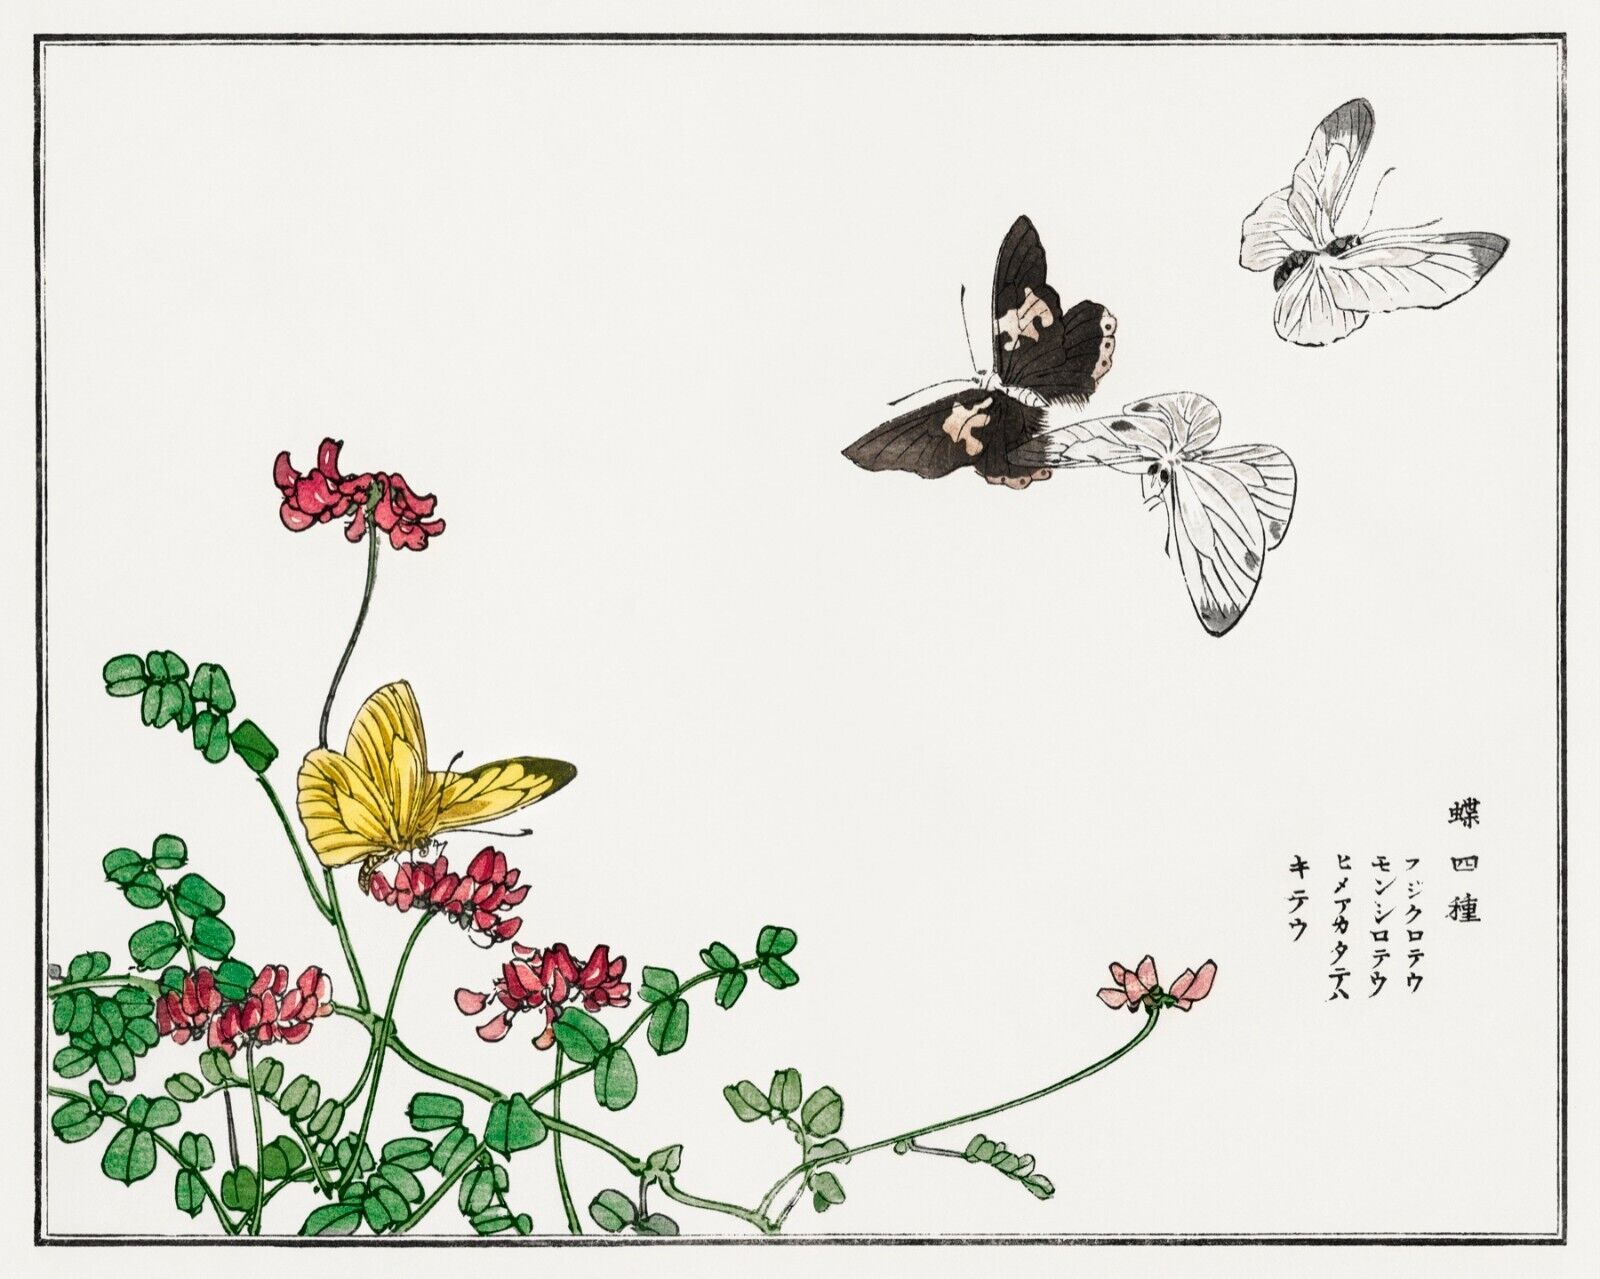 10072.Decor Poster.Room home wall.1910 Japan print.Morimoto Toko art.Floral